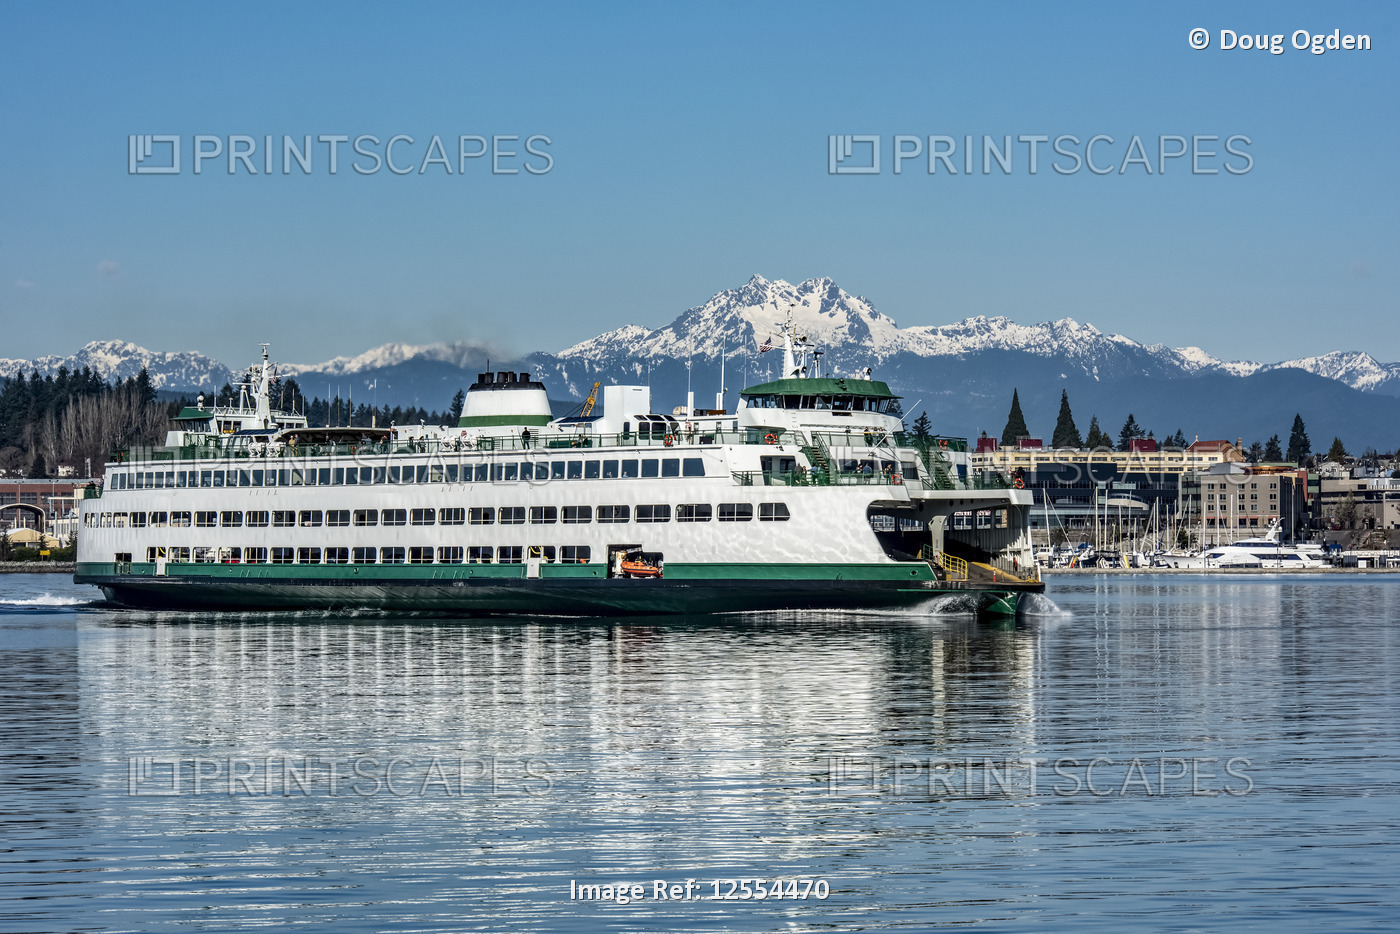 The Washington State Ferry Walla Walla departs Bremerton, Washington. 'The ...